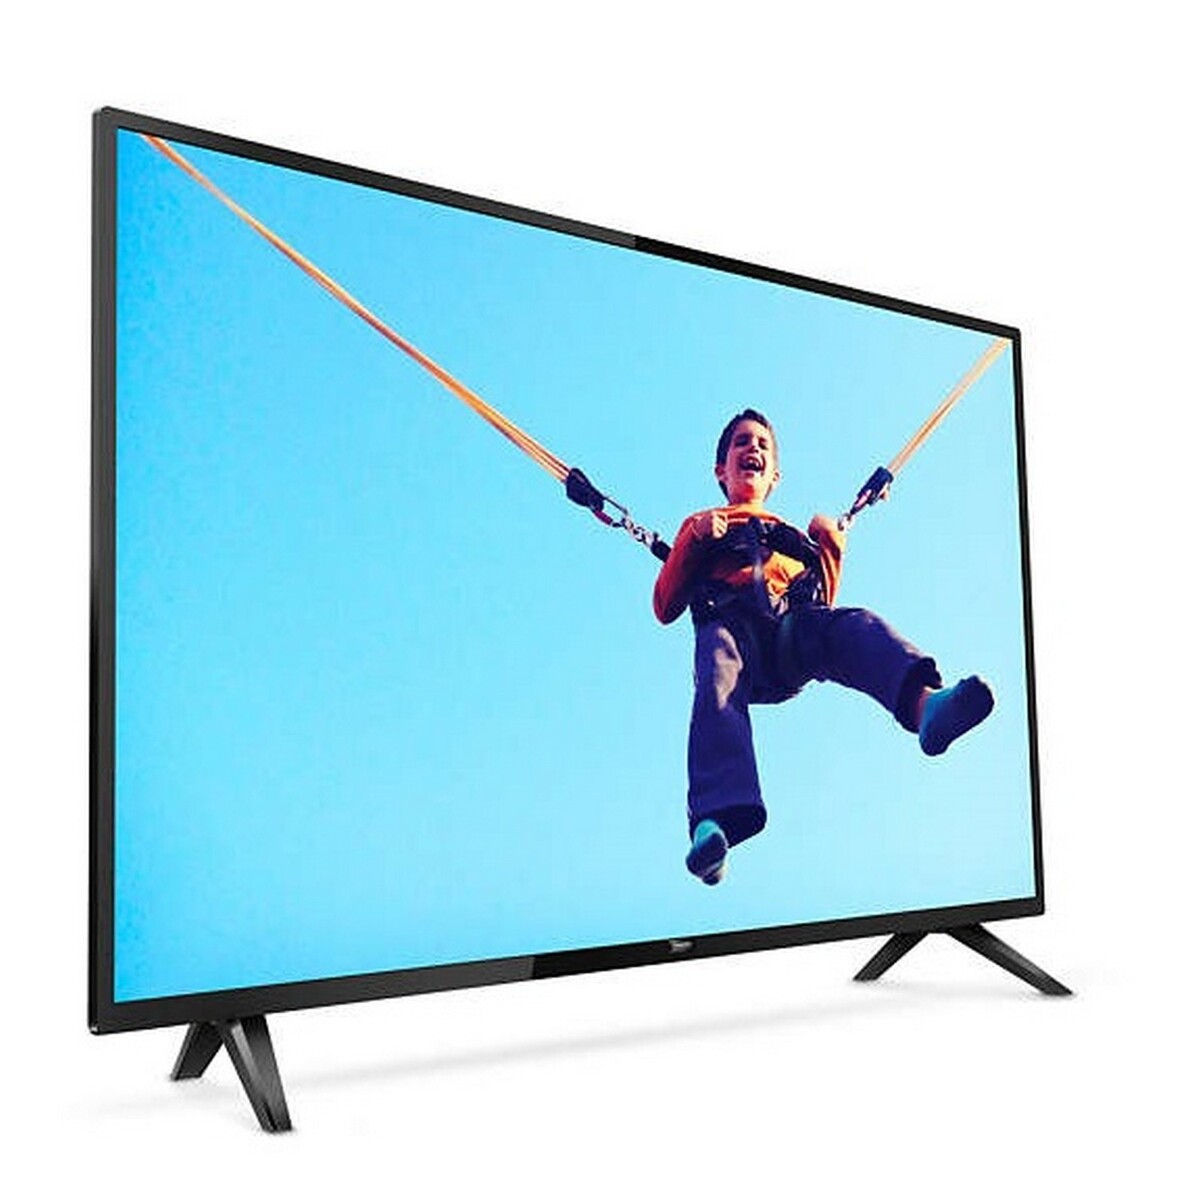 Philips Full HD LED Smart TV 43PFT5813S 43"